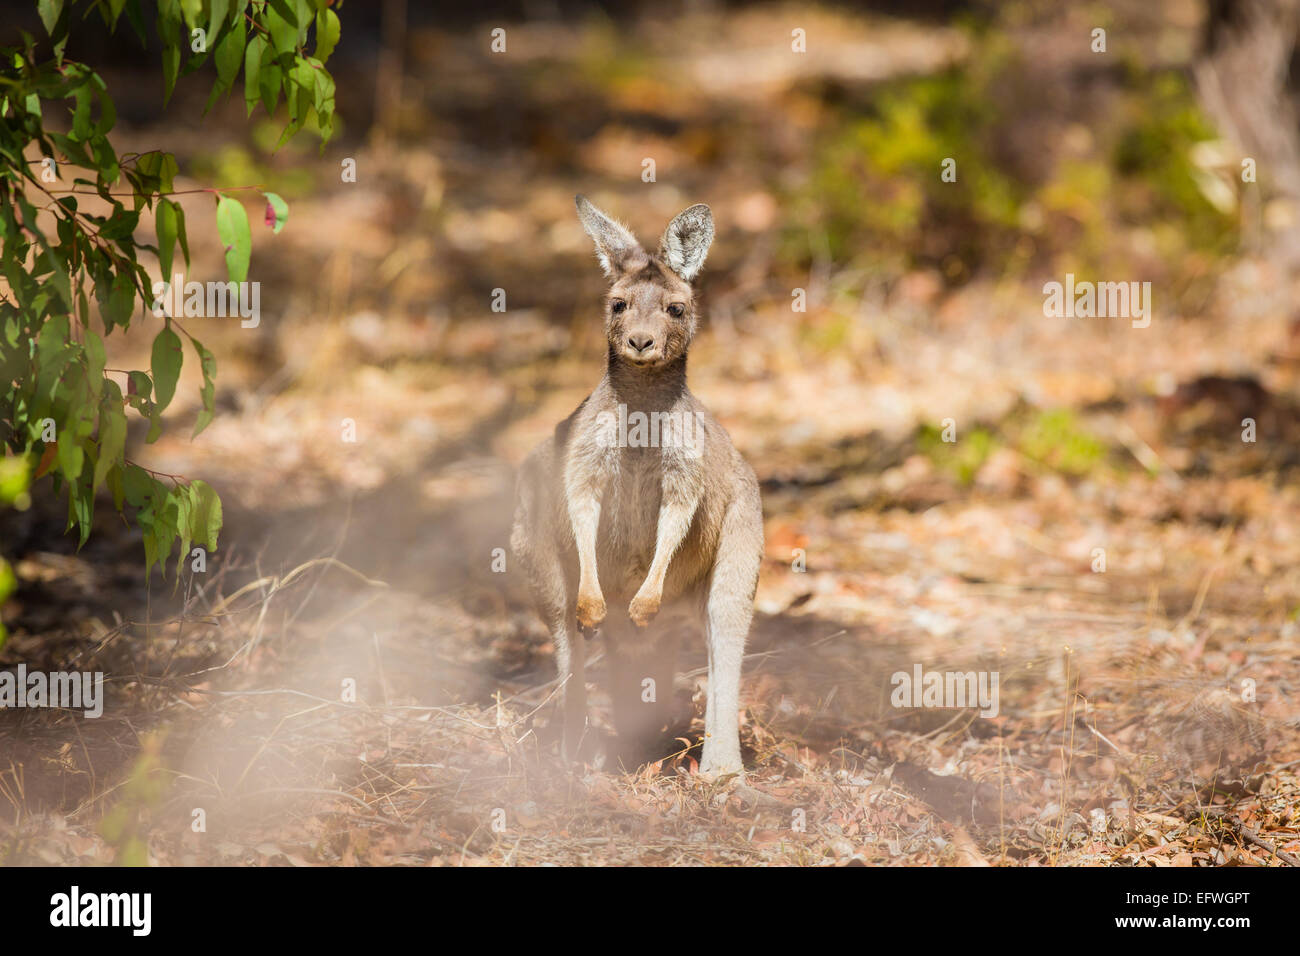 Kangaroo in Australia Stock Photo